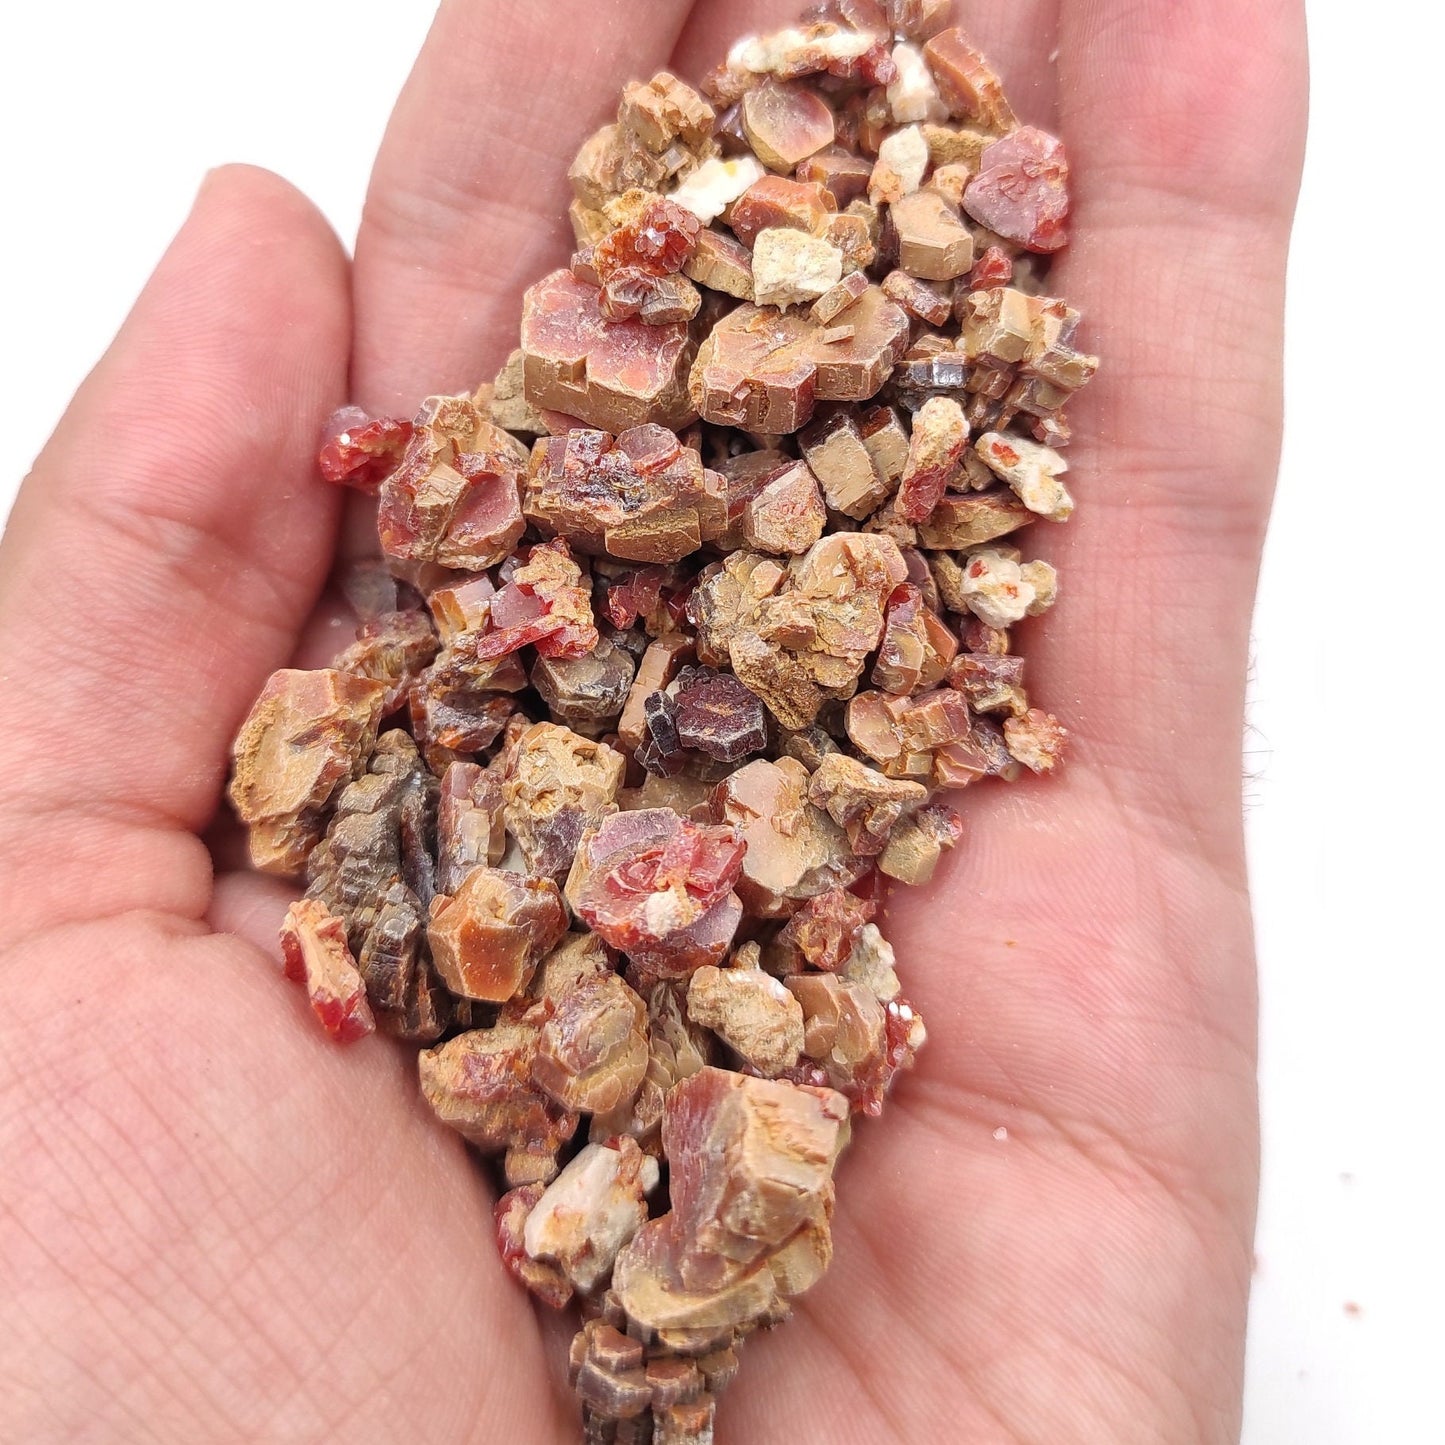 144g Vanadinite Pieces - Mini Vanadinite Crystals from Mibladen, Morocco - Raw Vanadinite Stones - Rough Vanadinite Crystal Gravel